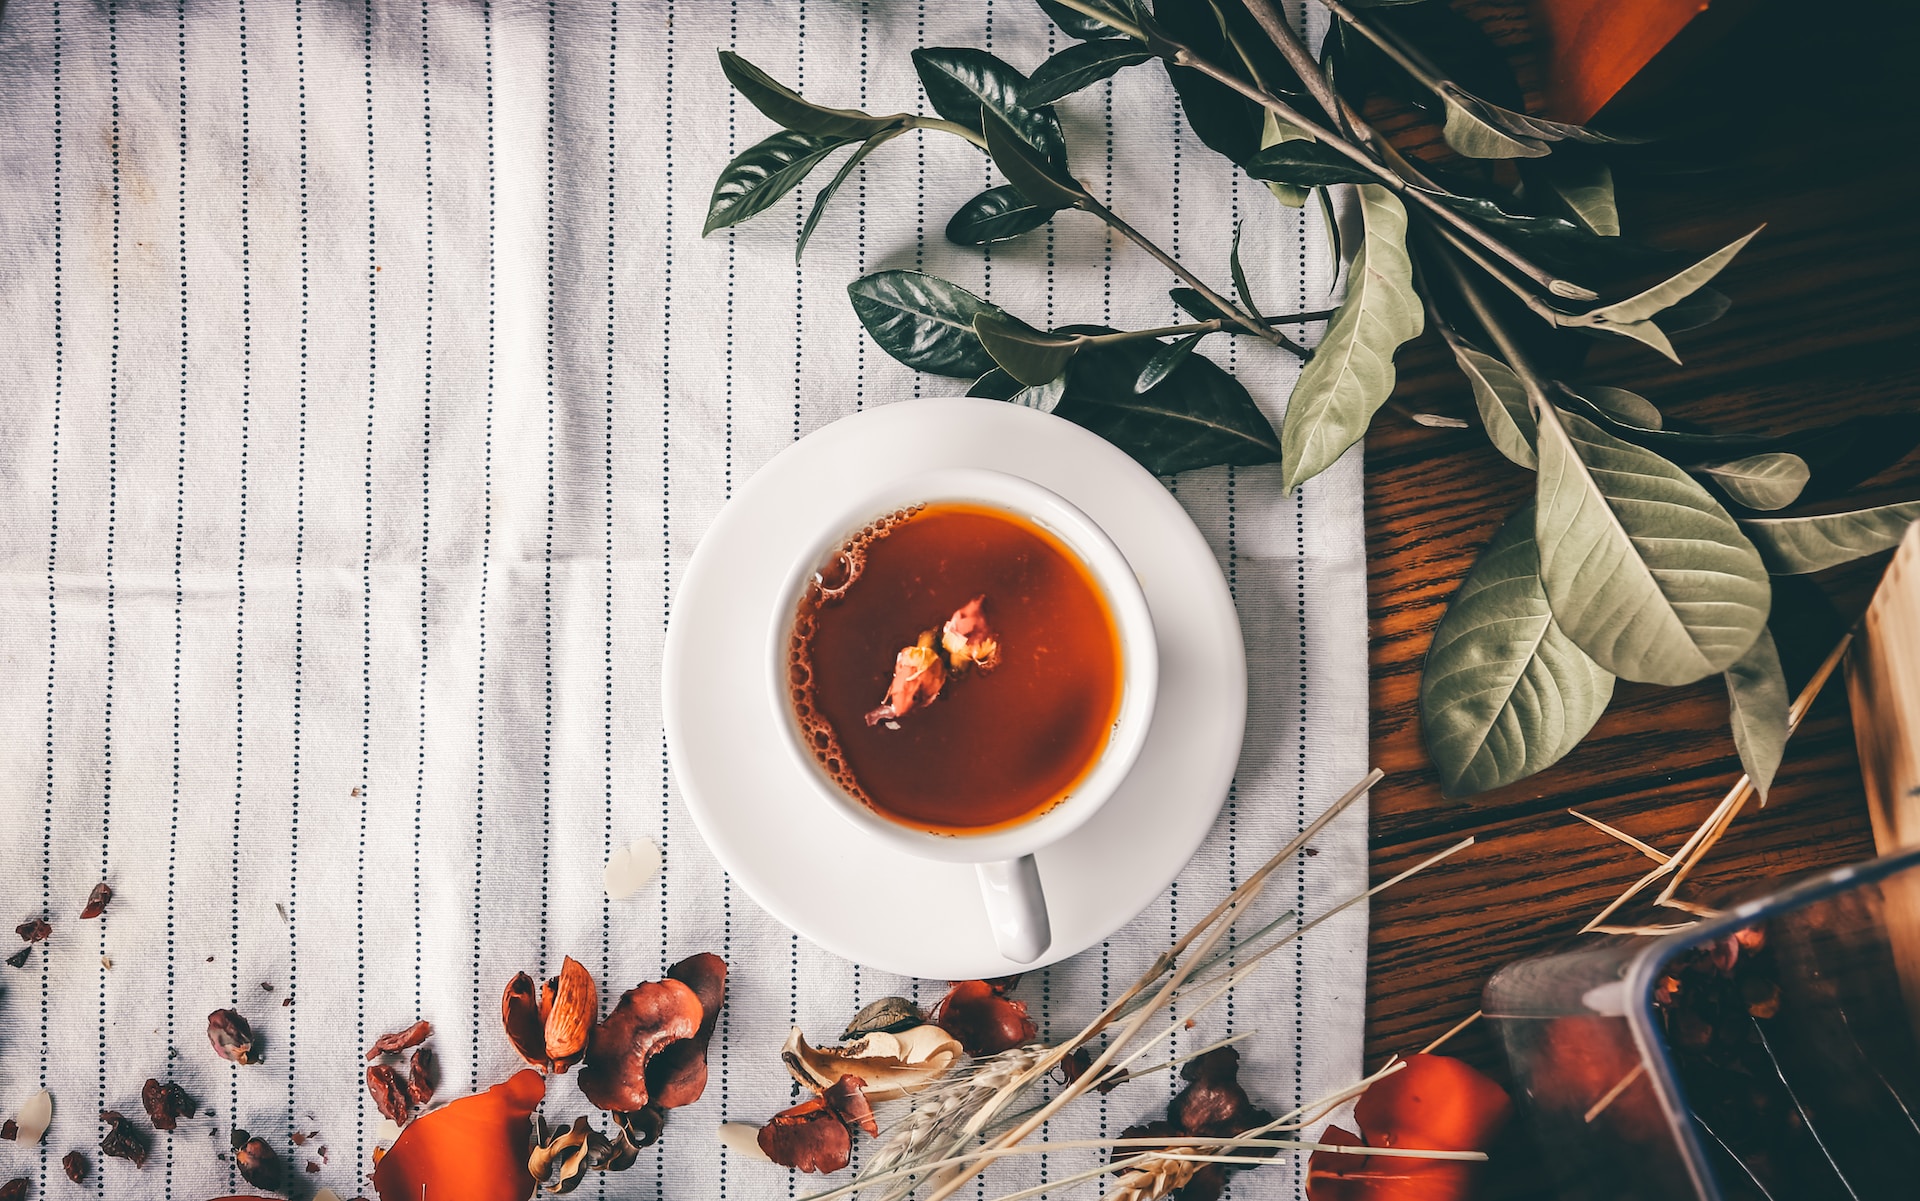 How to Make Moringa Tea: A Step-by-Step Guide